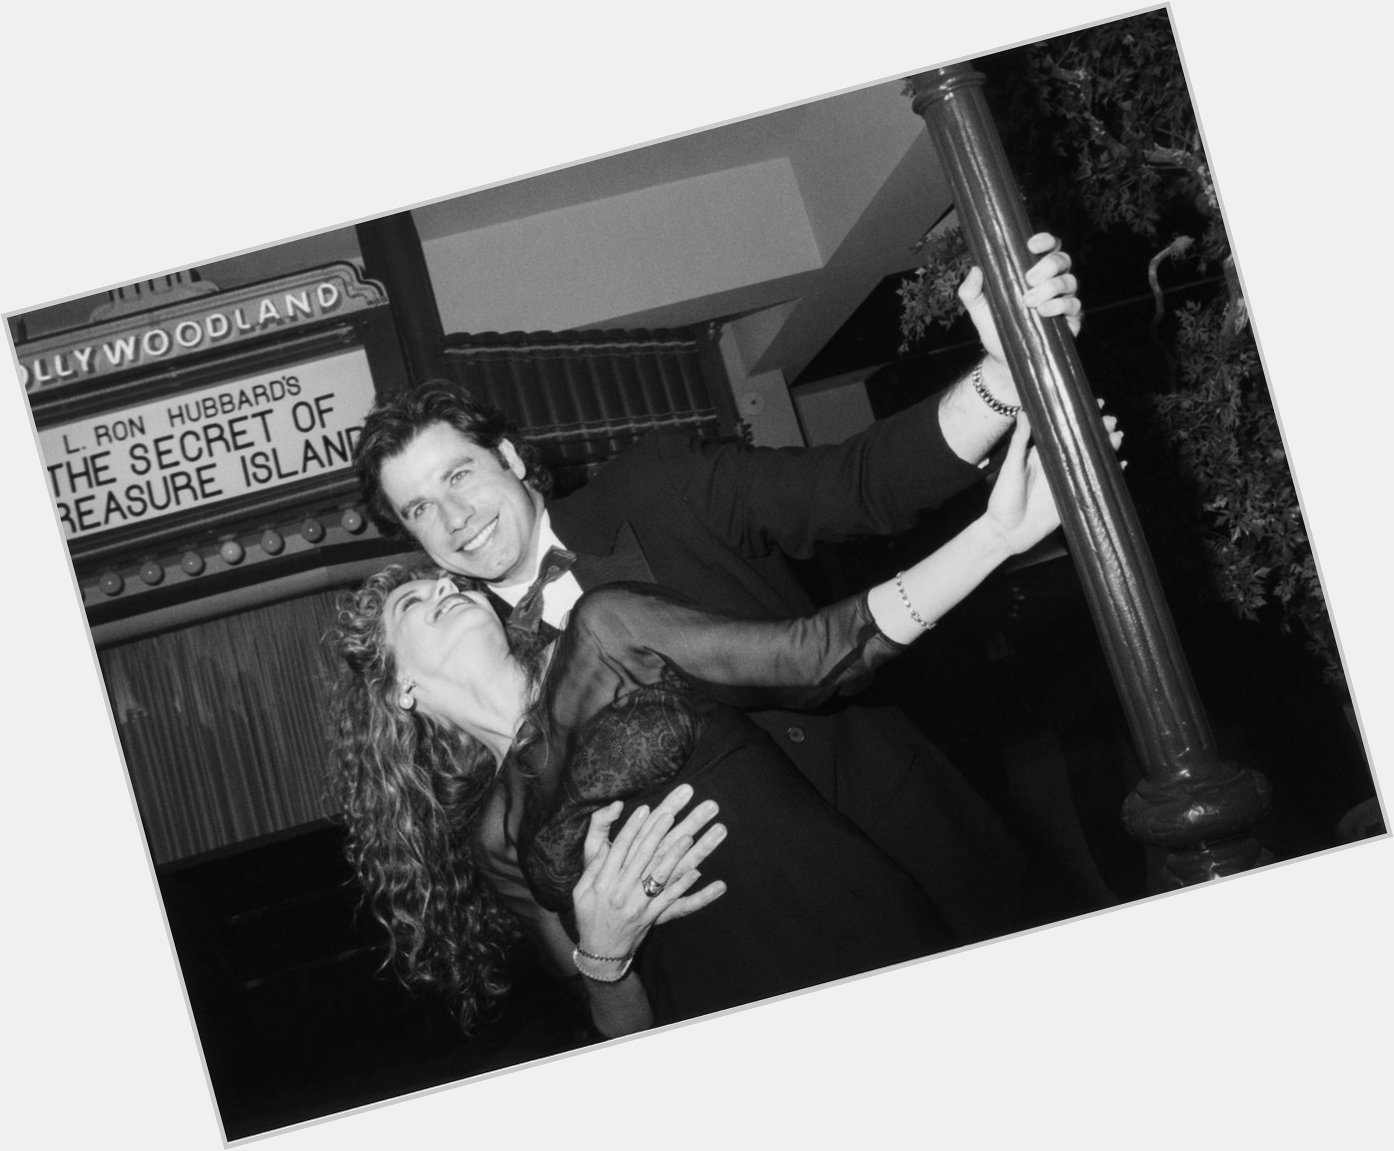 John Travolta posted a tribute for Kelly Preston\s birthday: \"Happy Birthday hon! All my love, John.\"  